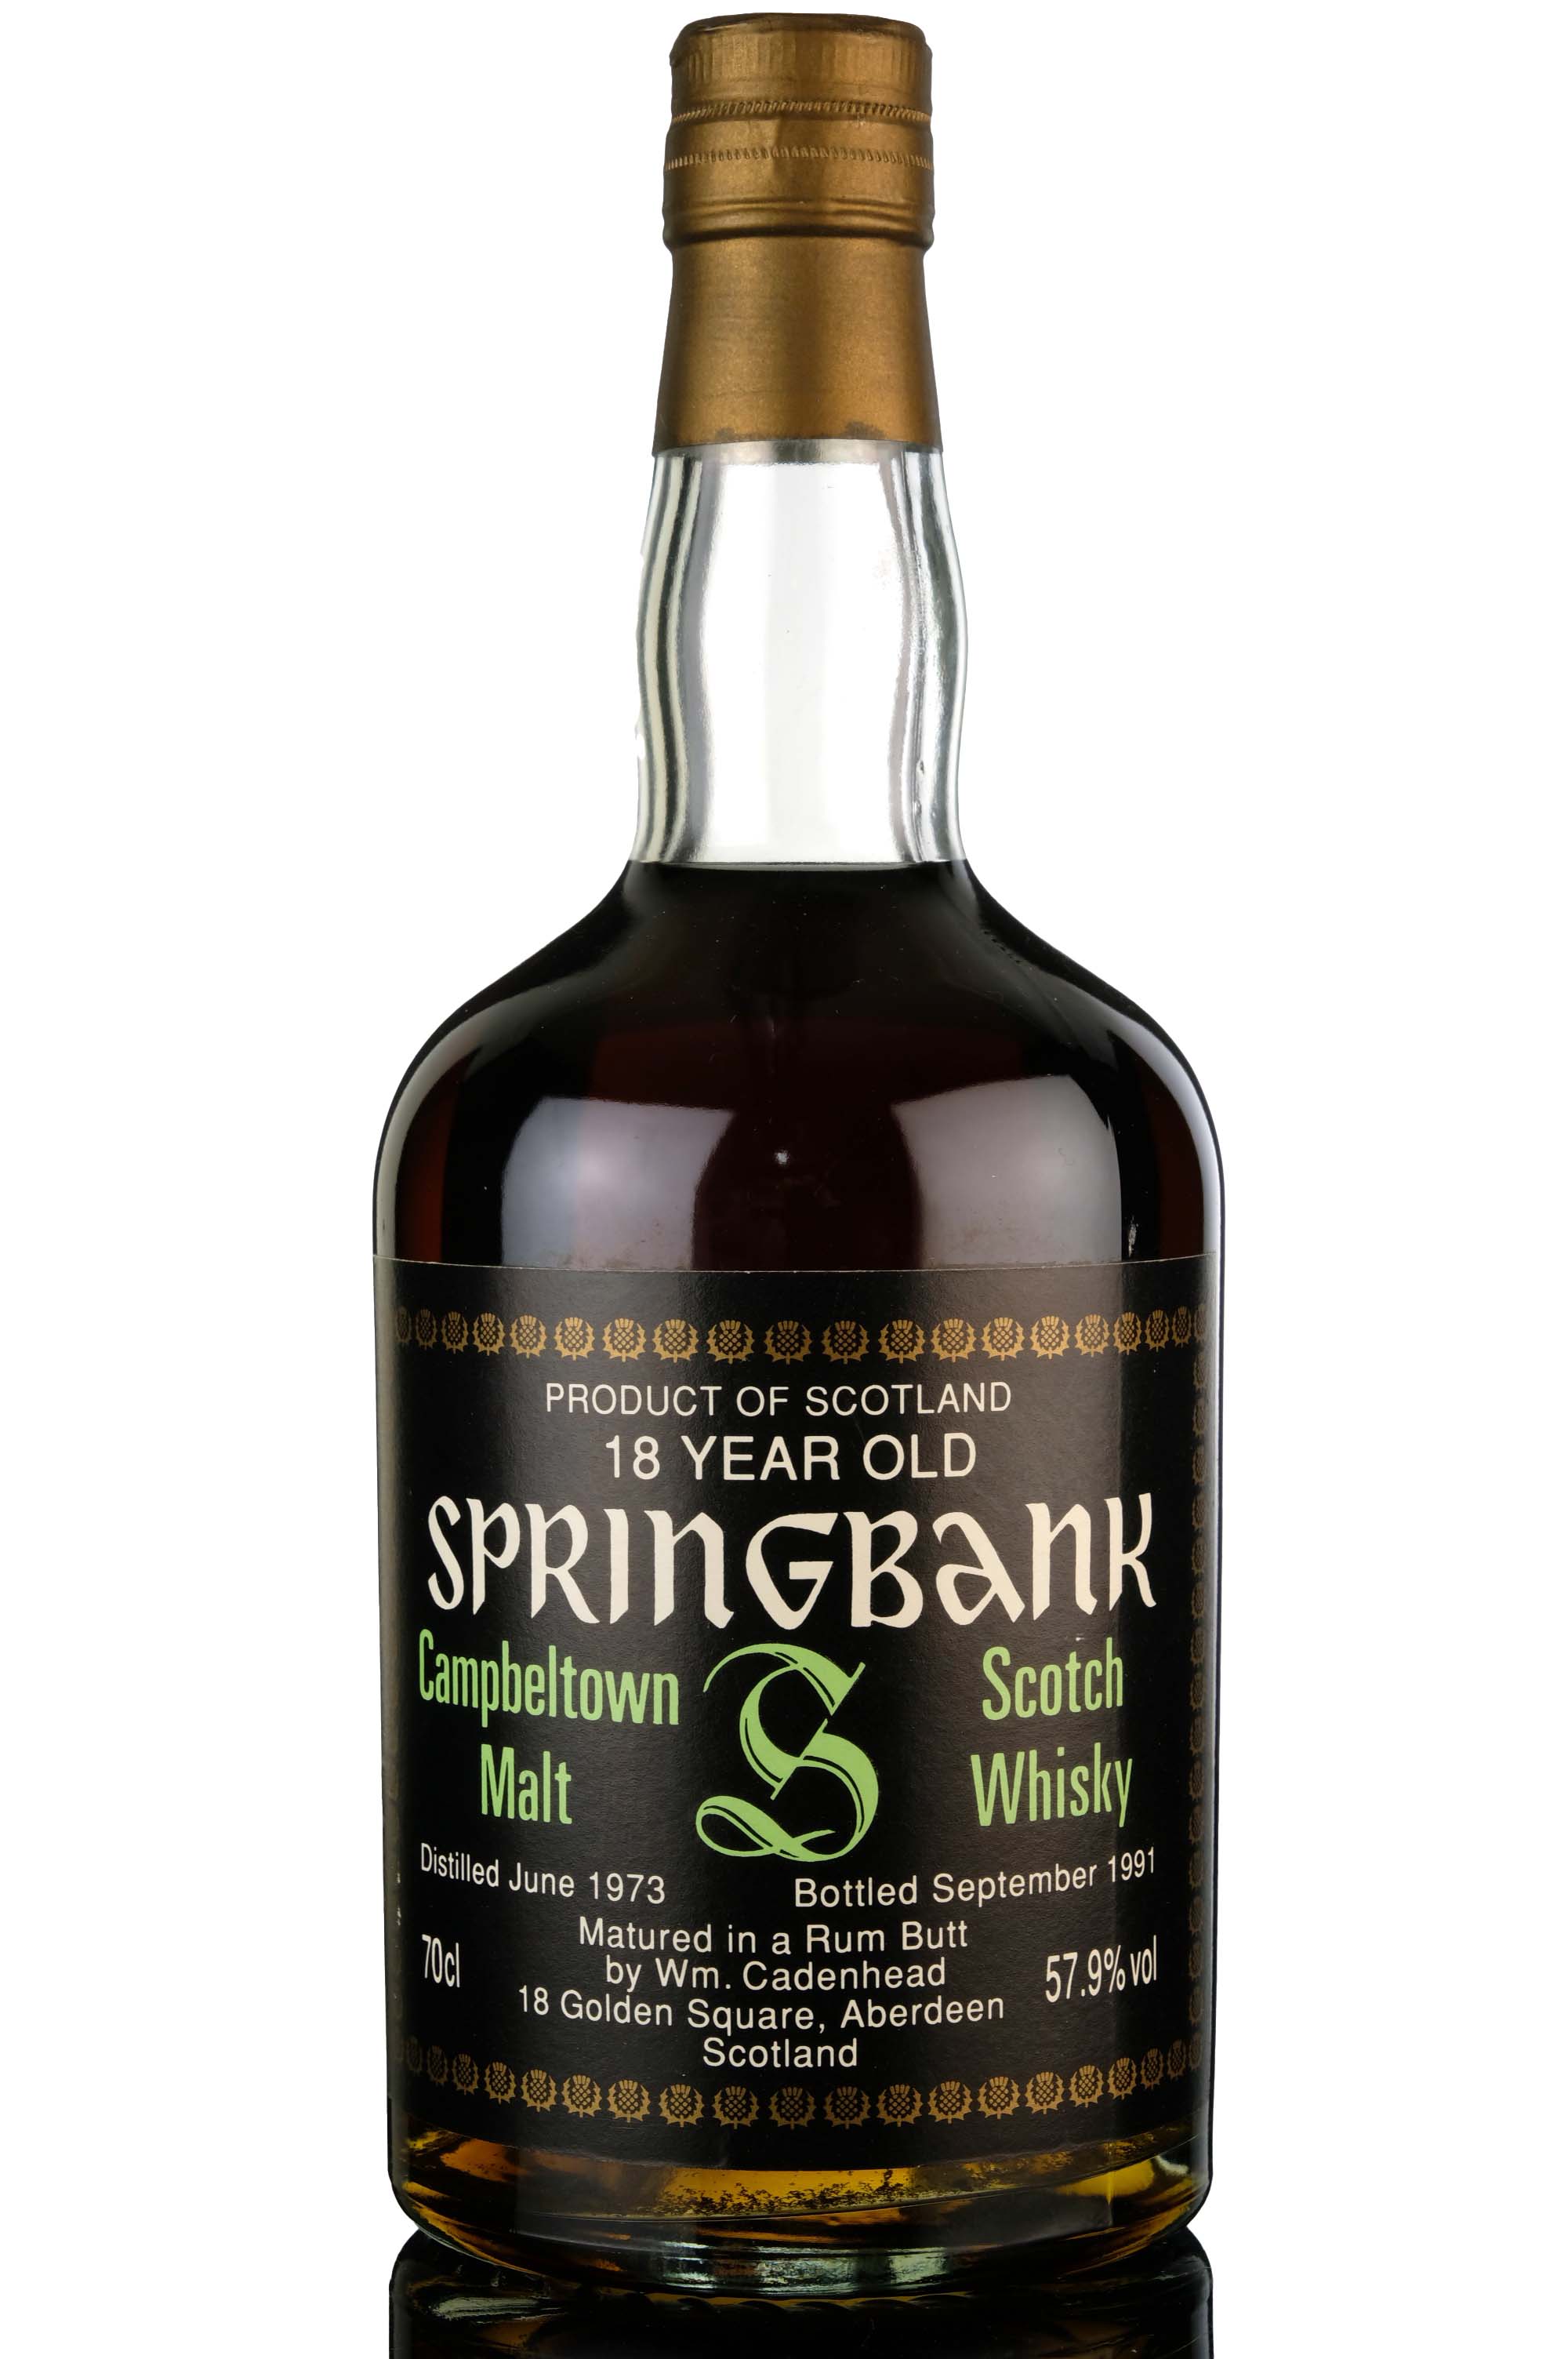 Springbank 1973-1991 - 18 Year Old - Cadenheads Rum Butt - 57.9%